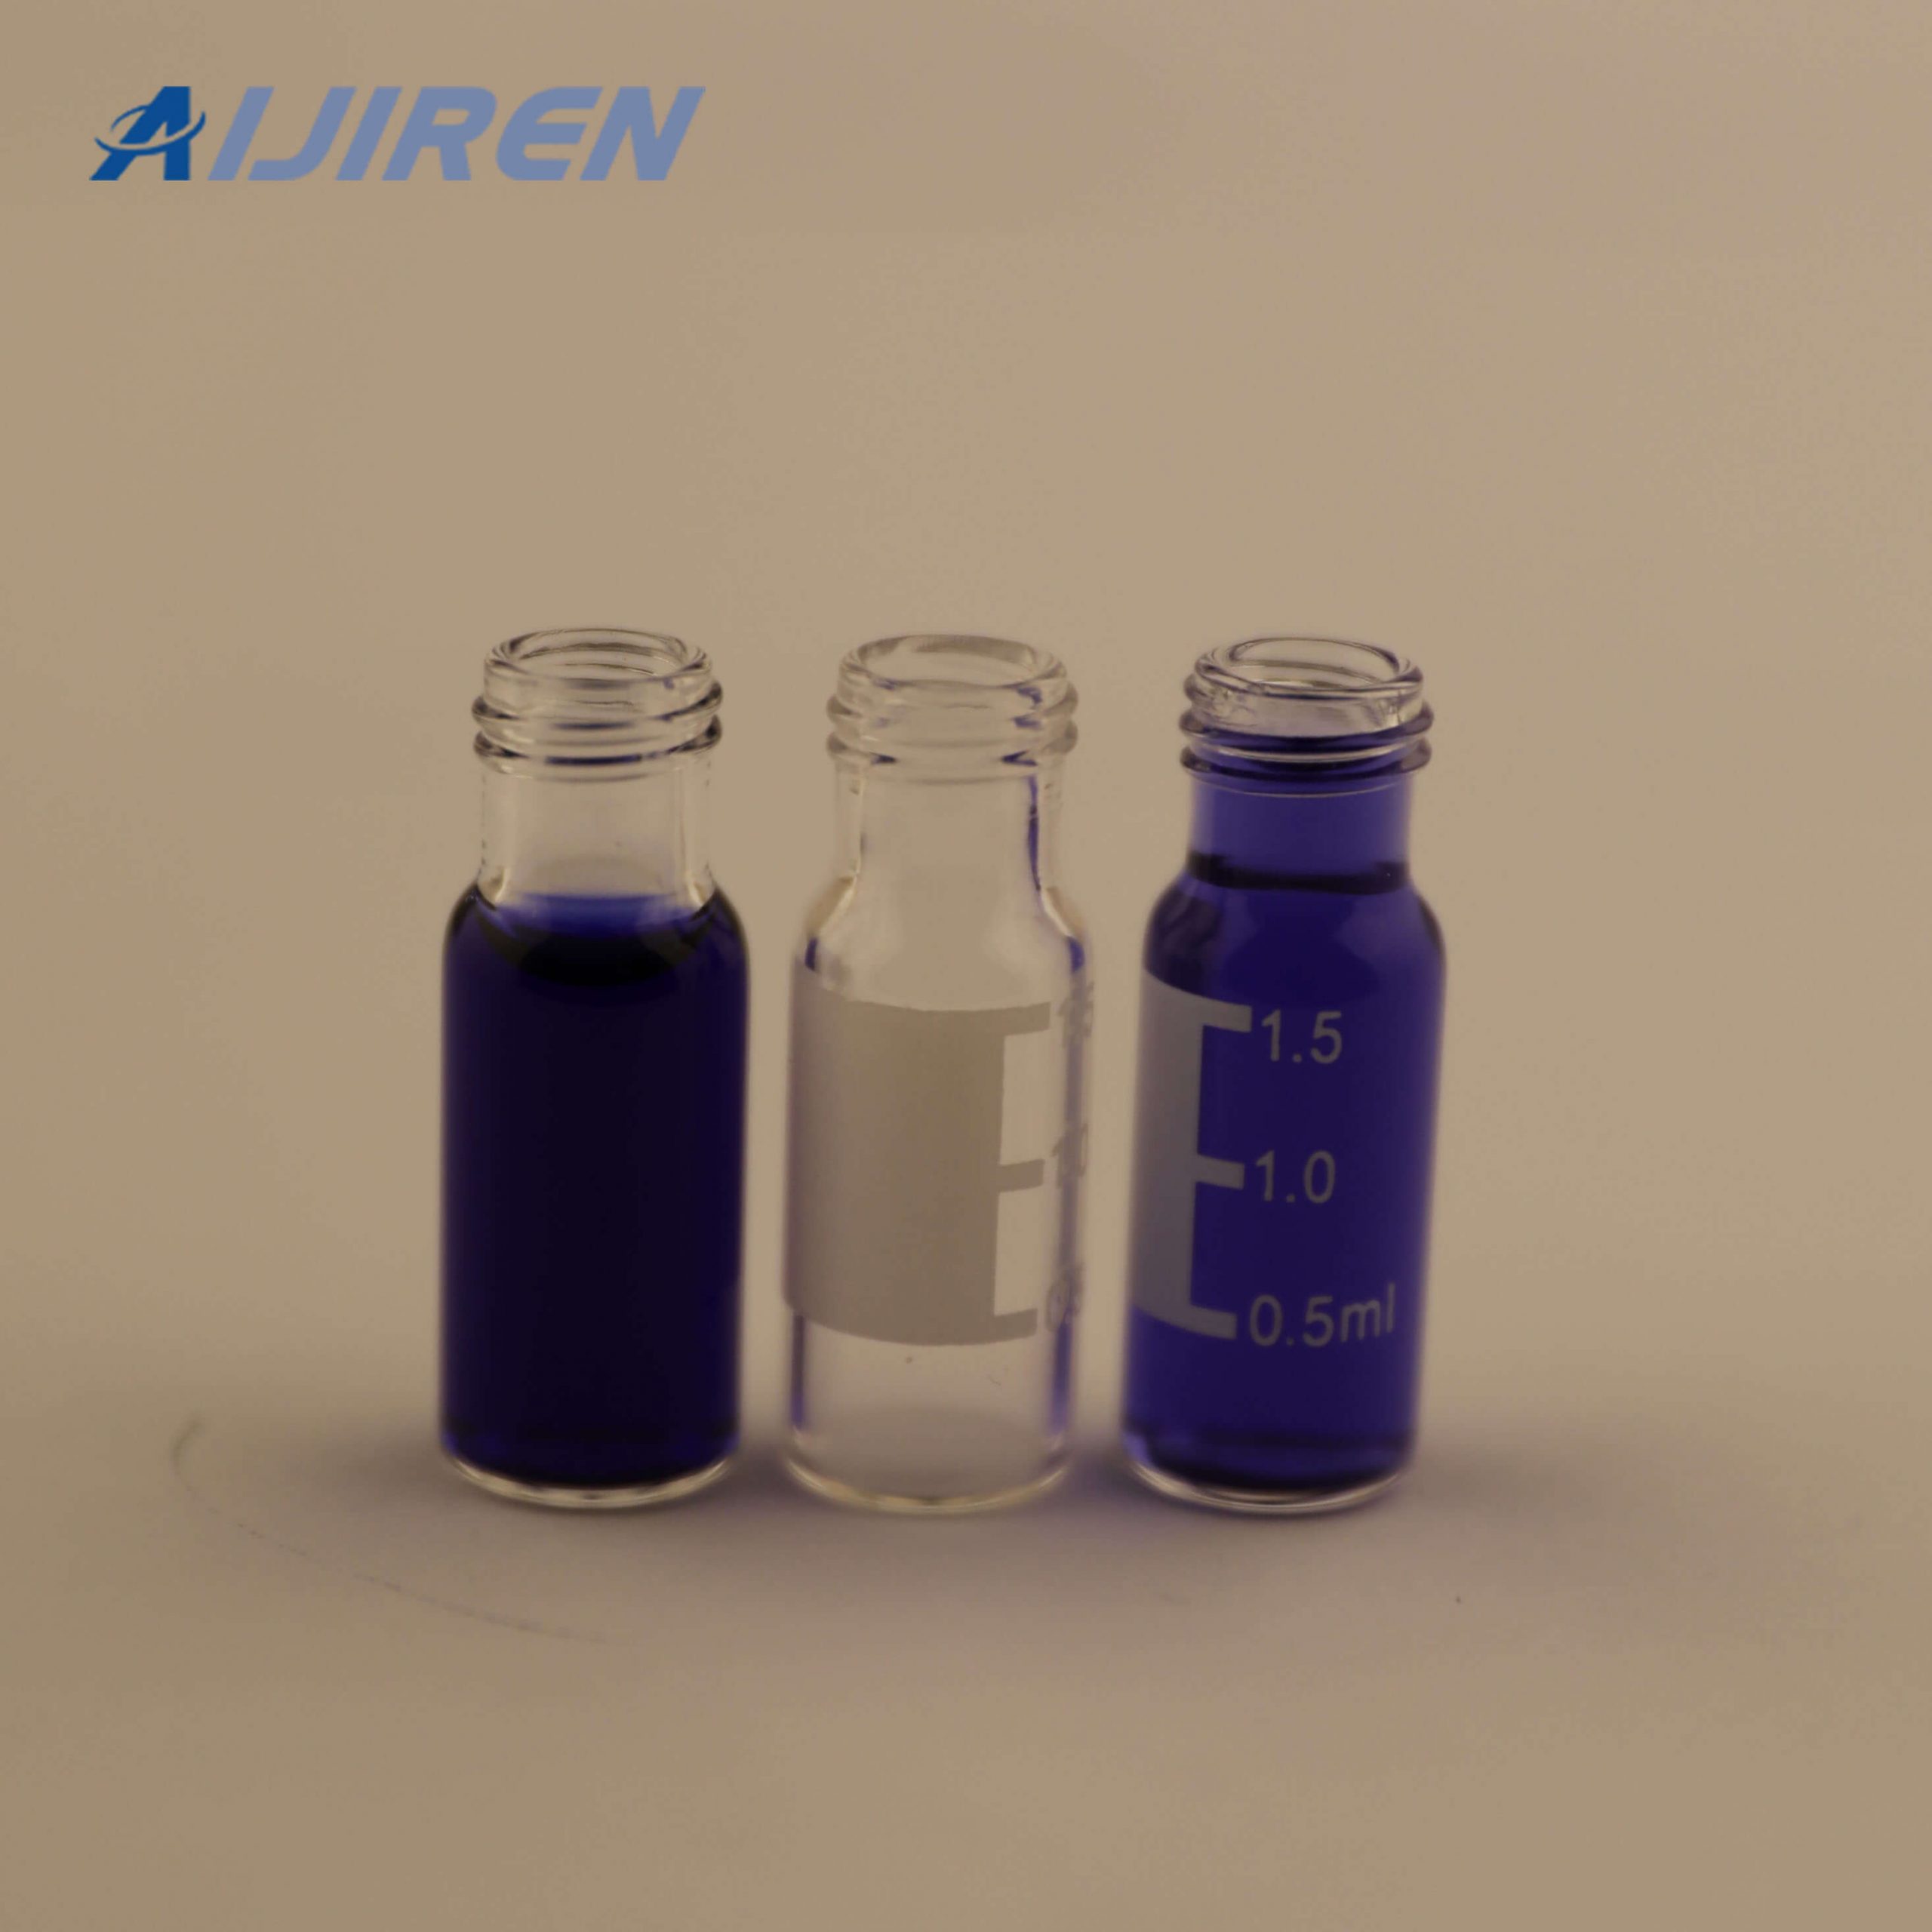 2ml Lab Glass Vials for Aijiren Autosampler